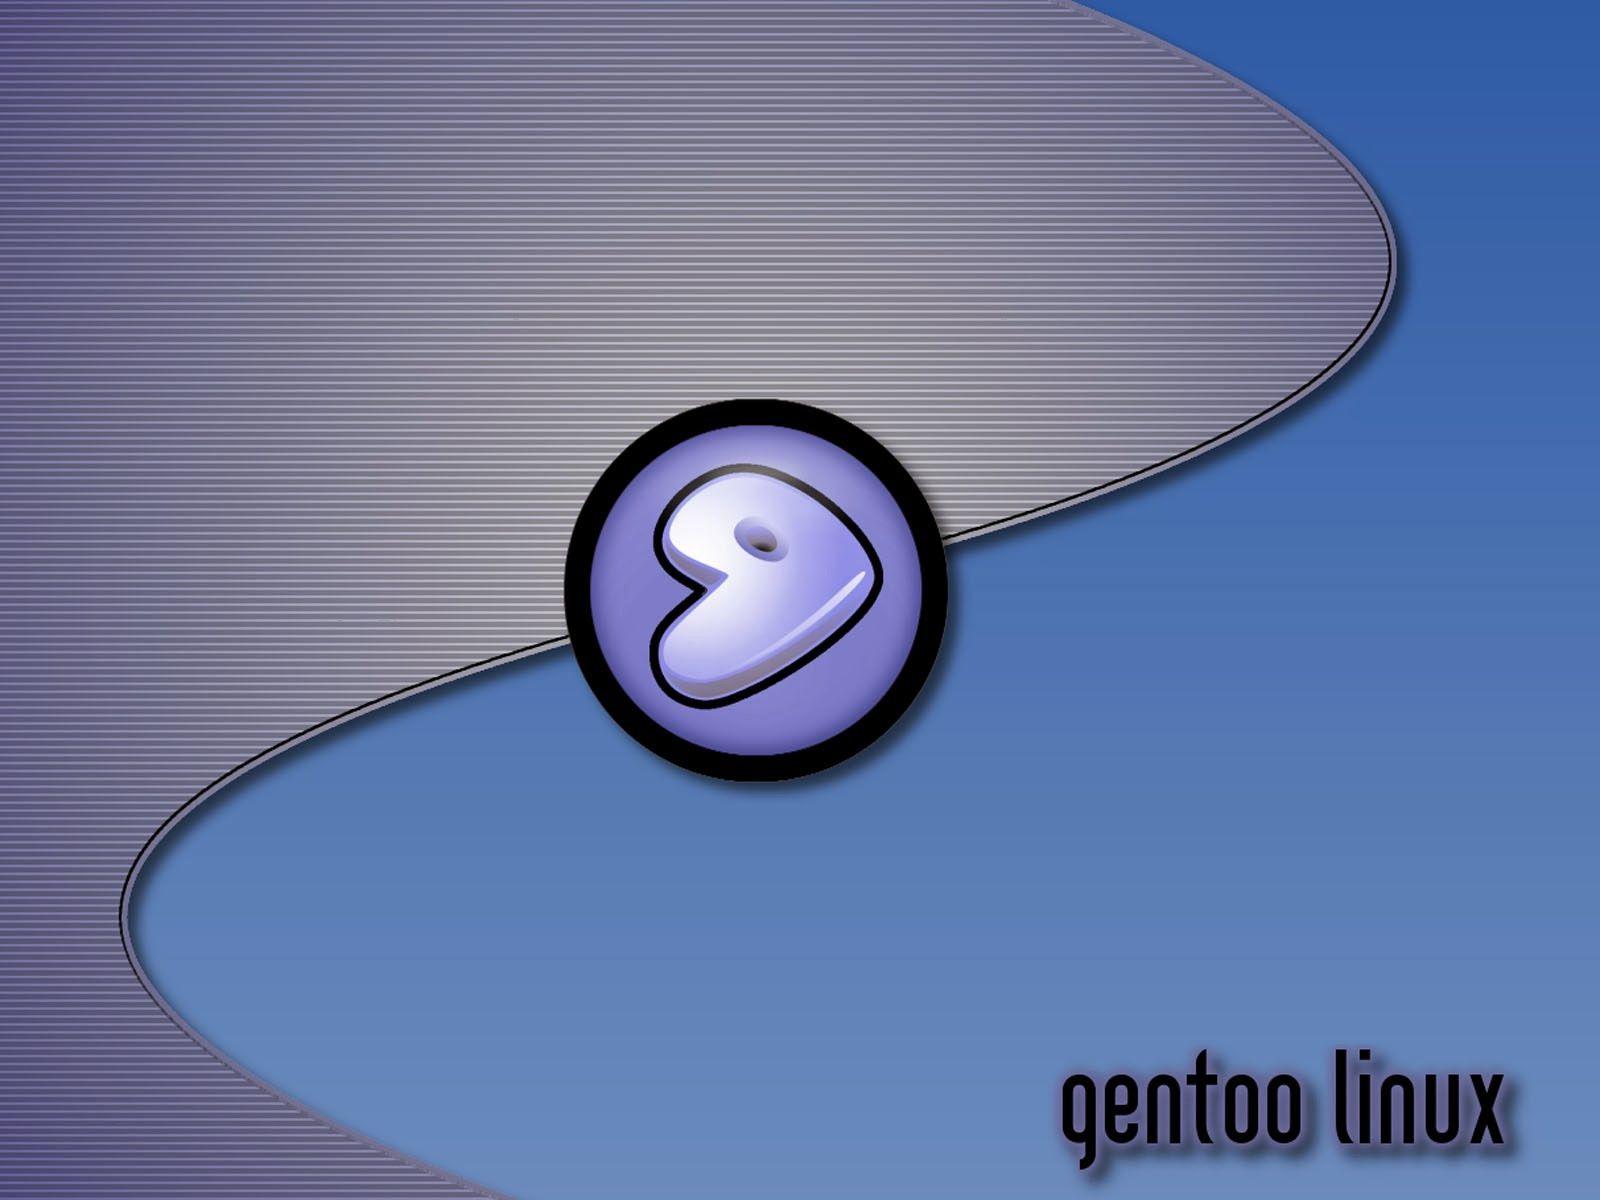 Clovisso Wallpaper Gallery: Gentoo Linux Wallpaper